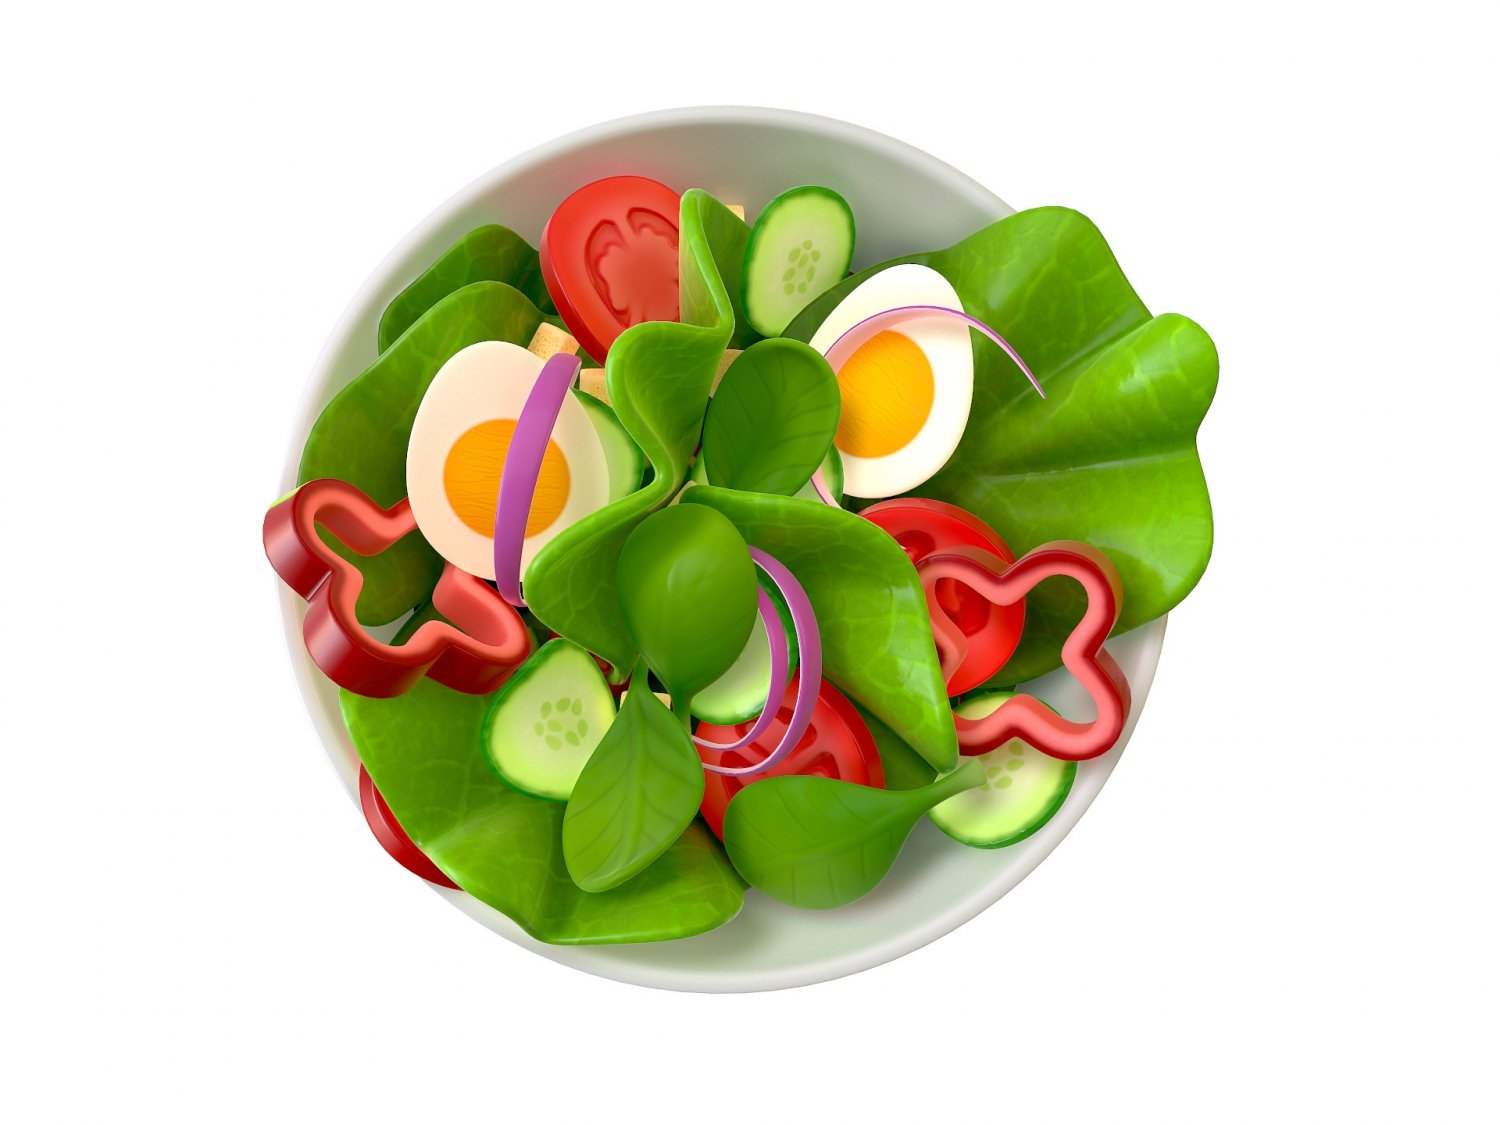 66 Salad Tosser Images, Stock Photos, 3D objects, & Vectors